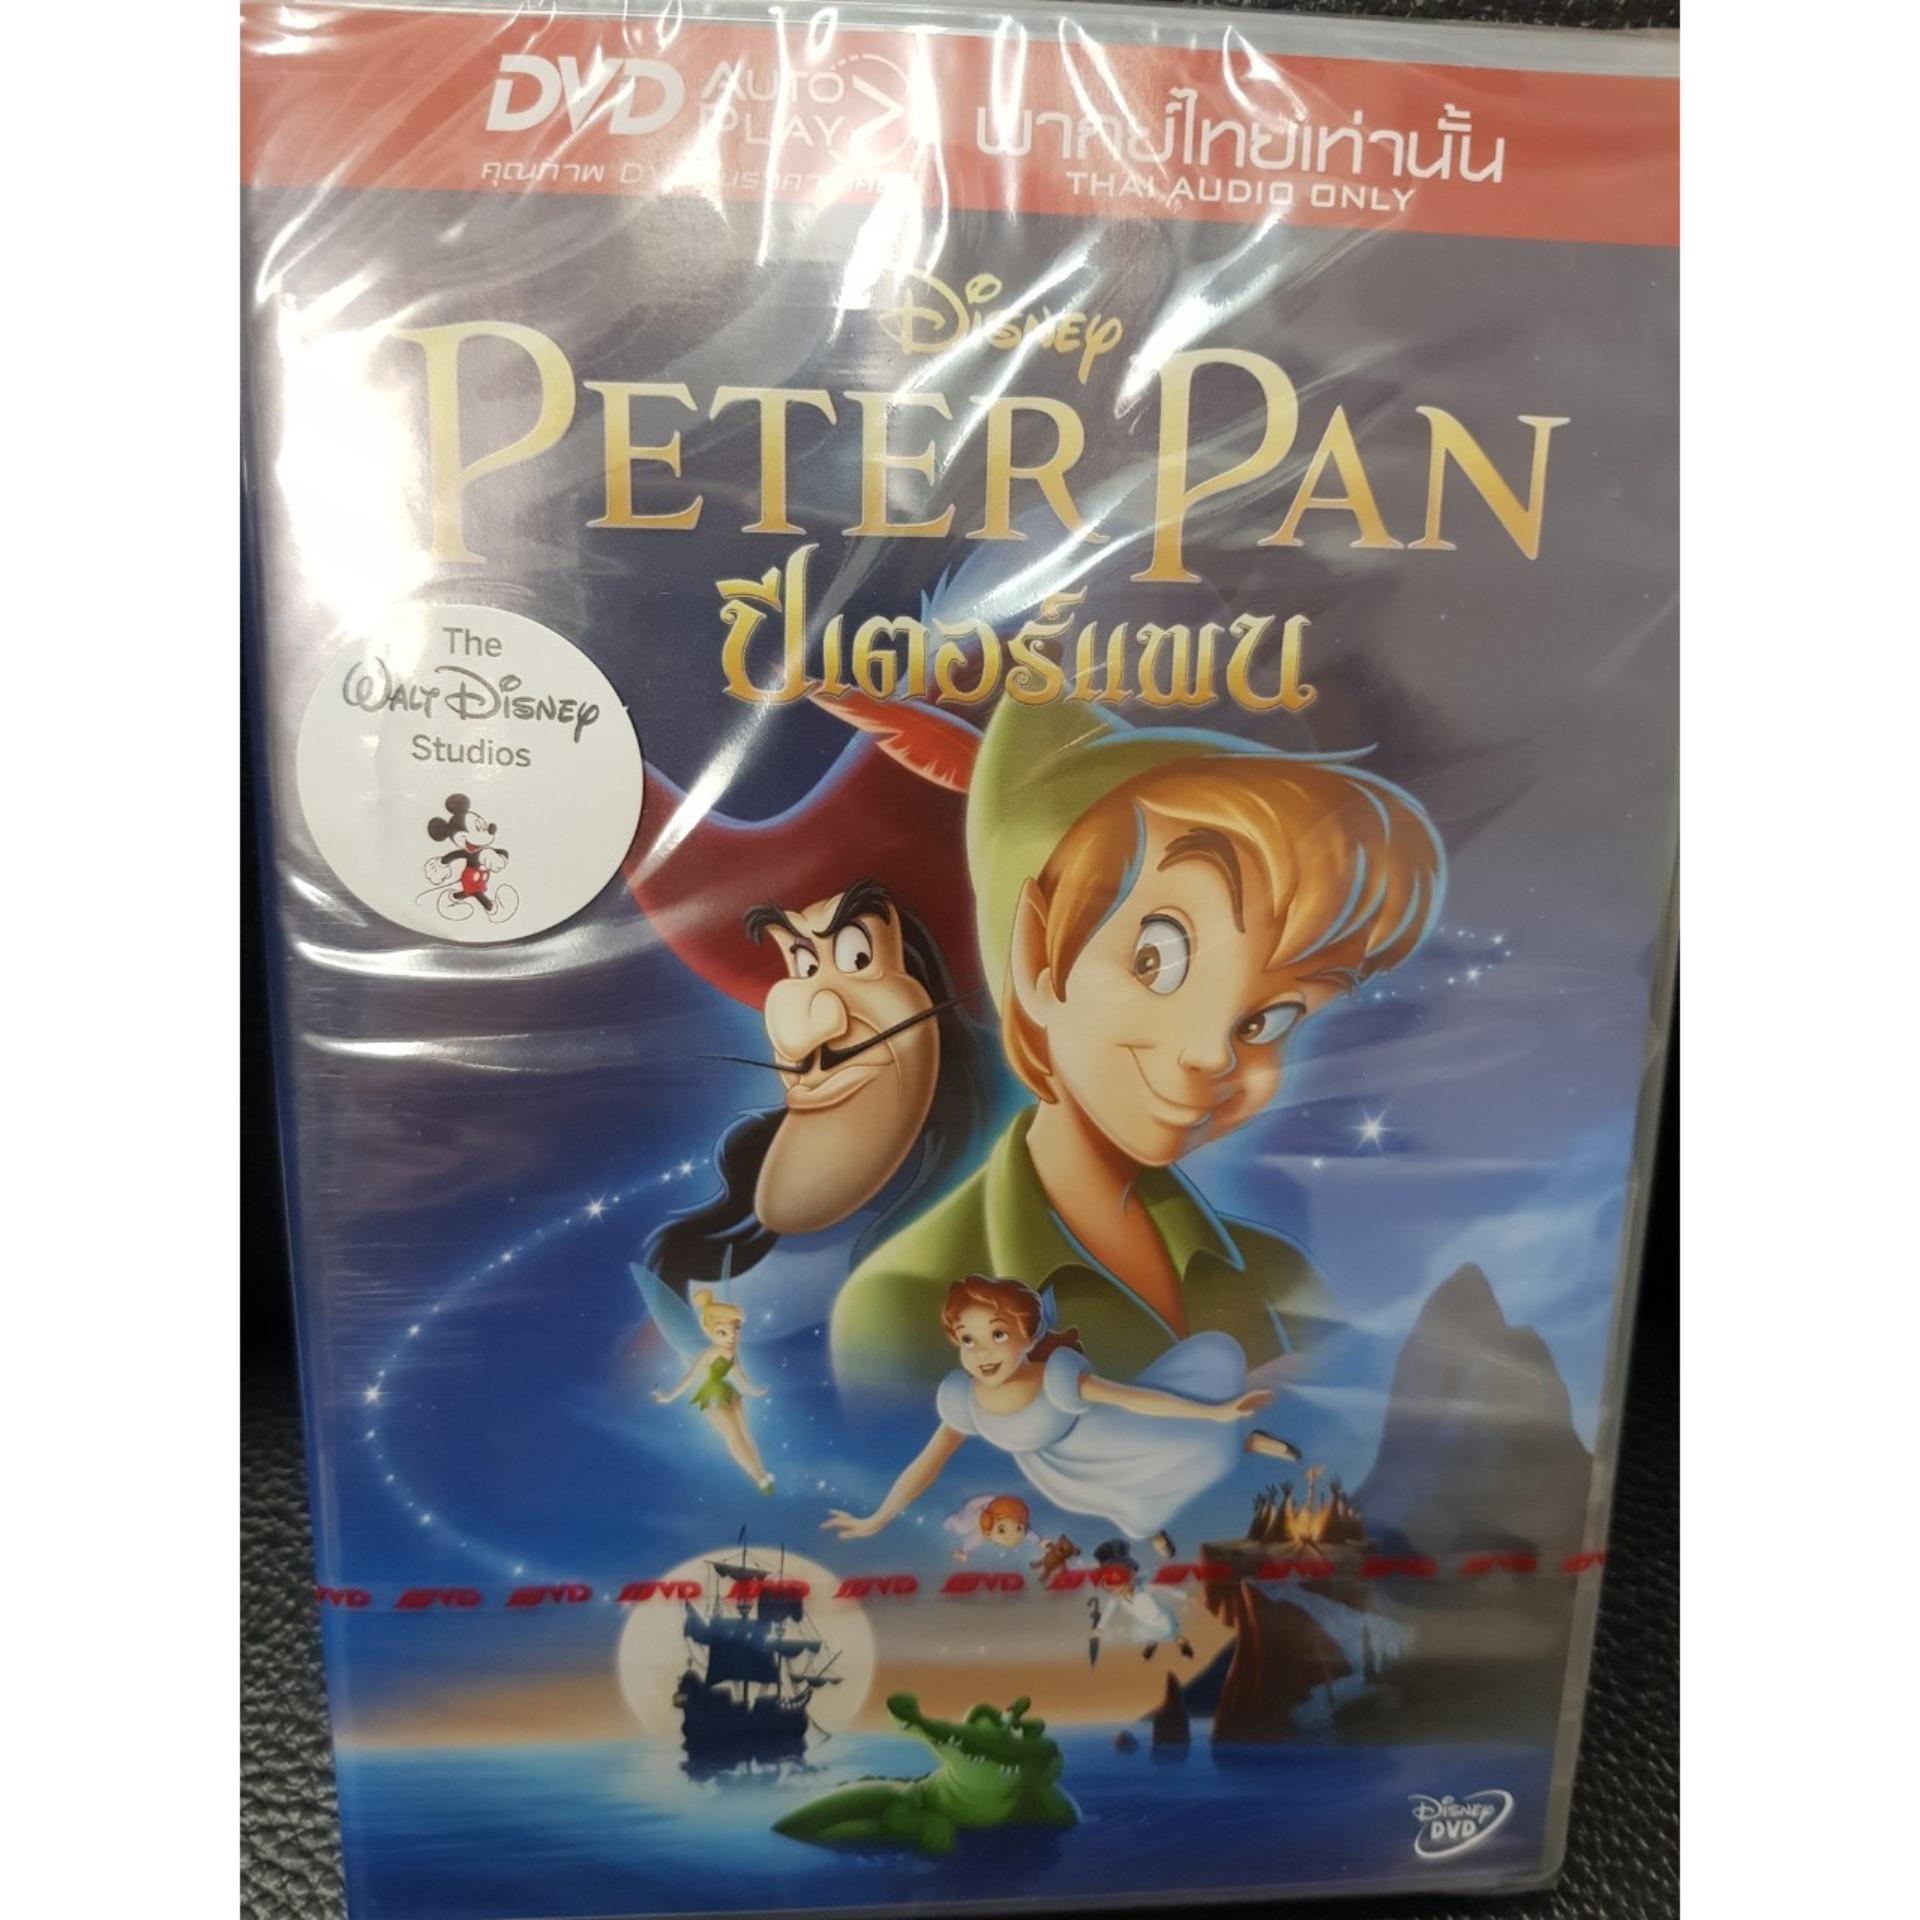 DVDหนัง ปีเตอร์แพน PETER PAN พากย์ไทยเท่านั้น DVD AUTO PLAY (MVDDVD179-ปีเตอร์แพนPETERPAN ) MVD DISNEY PIXAR DVD ดีวีดี หนัง การ์ตูน ดิสนีย์ cartoon ดิสนีย์